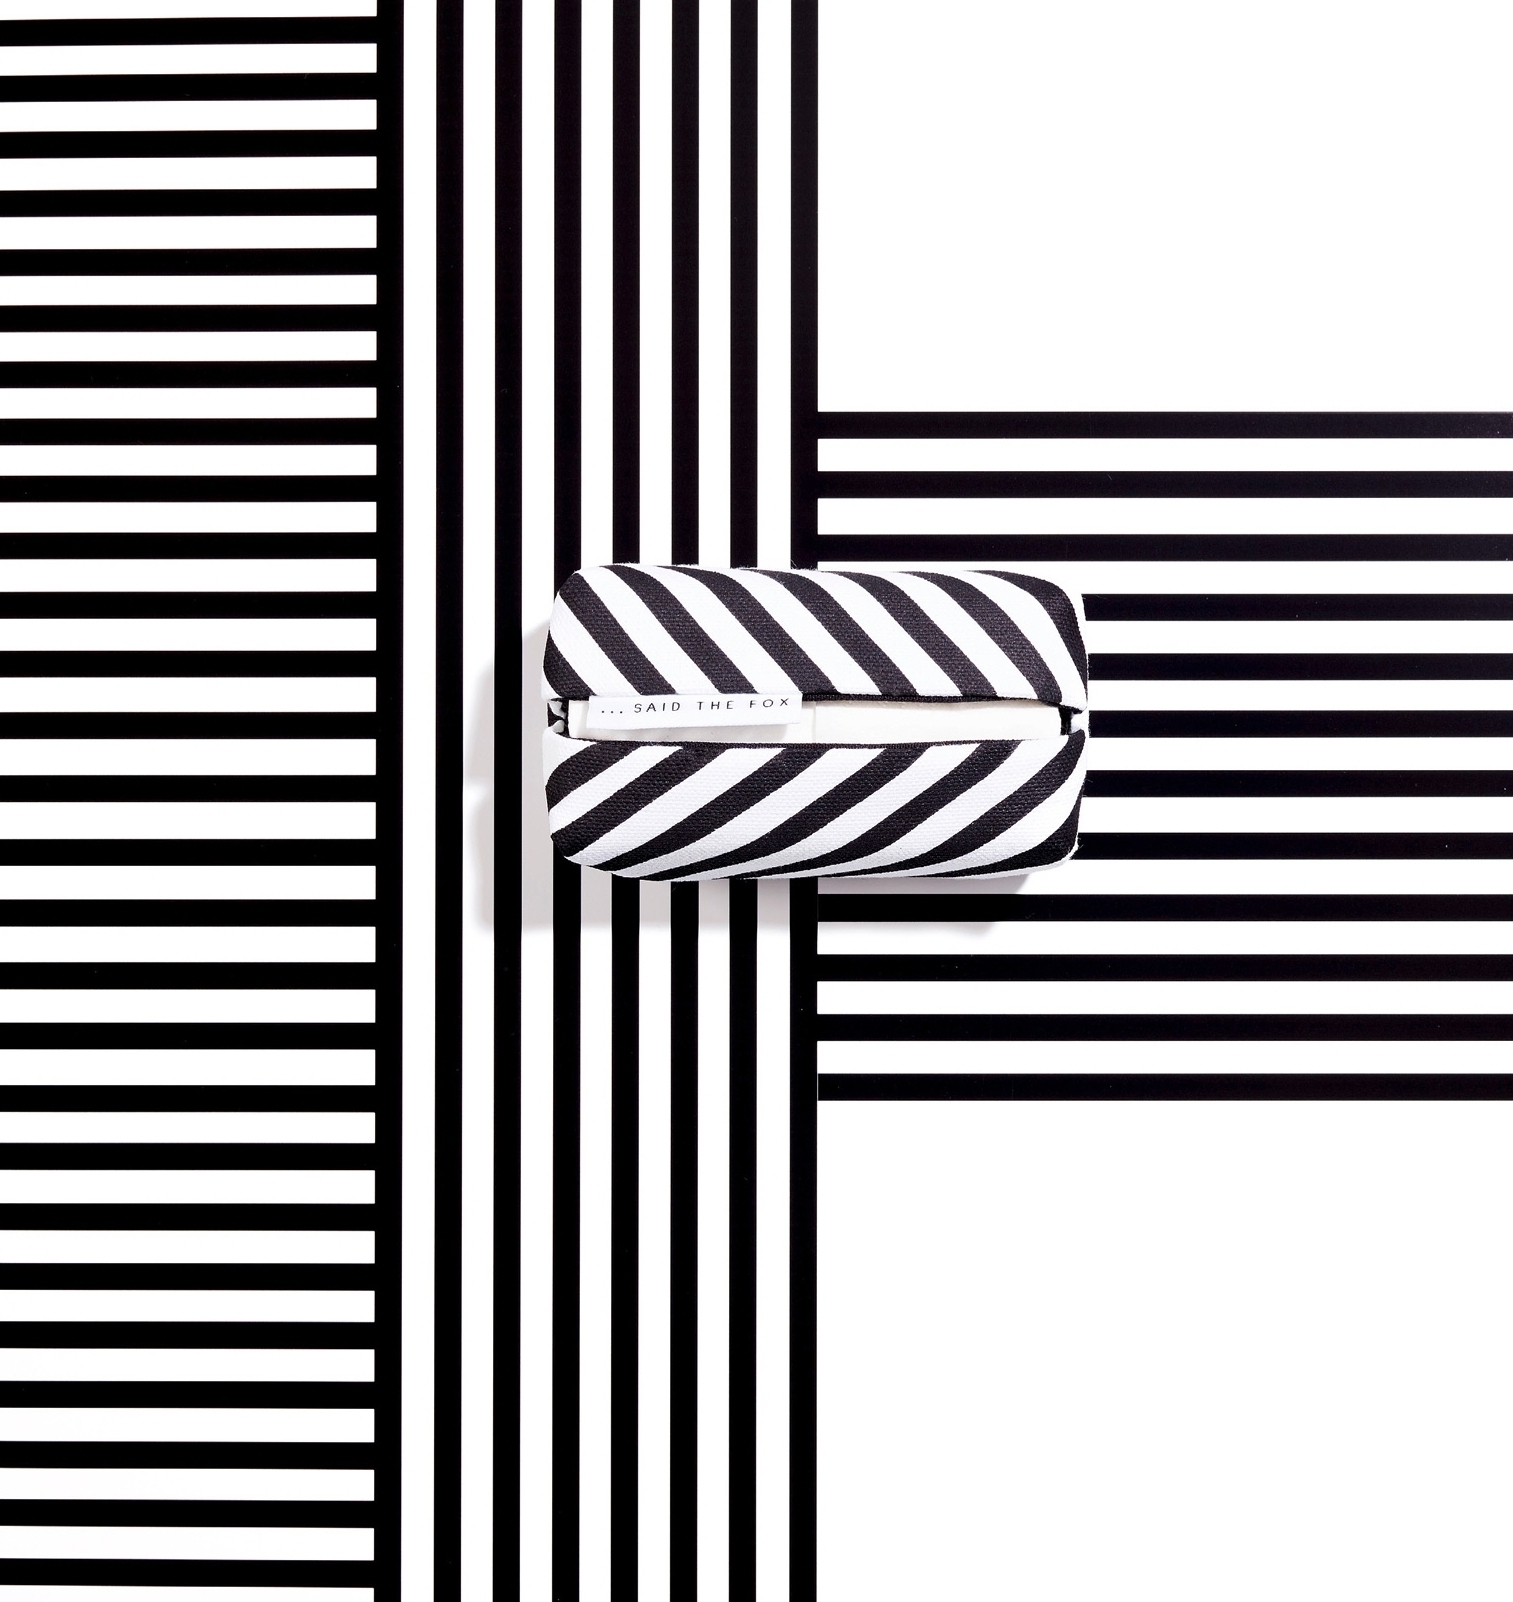 SaidTheFox-Lines&Stripes-TissueBox